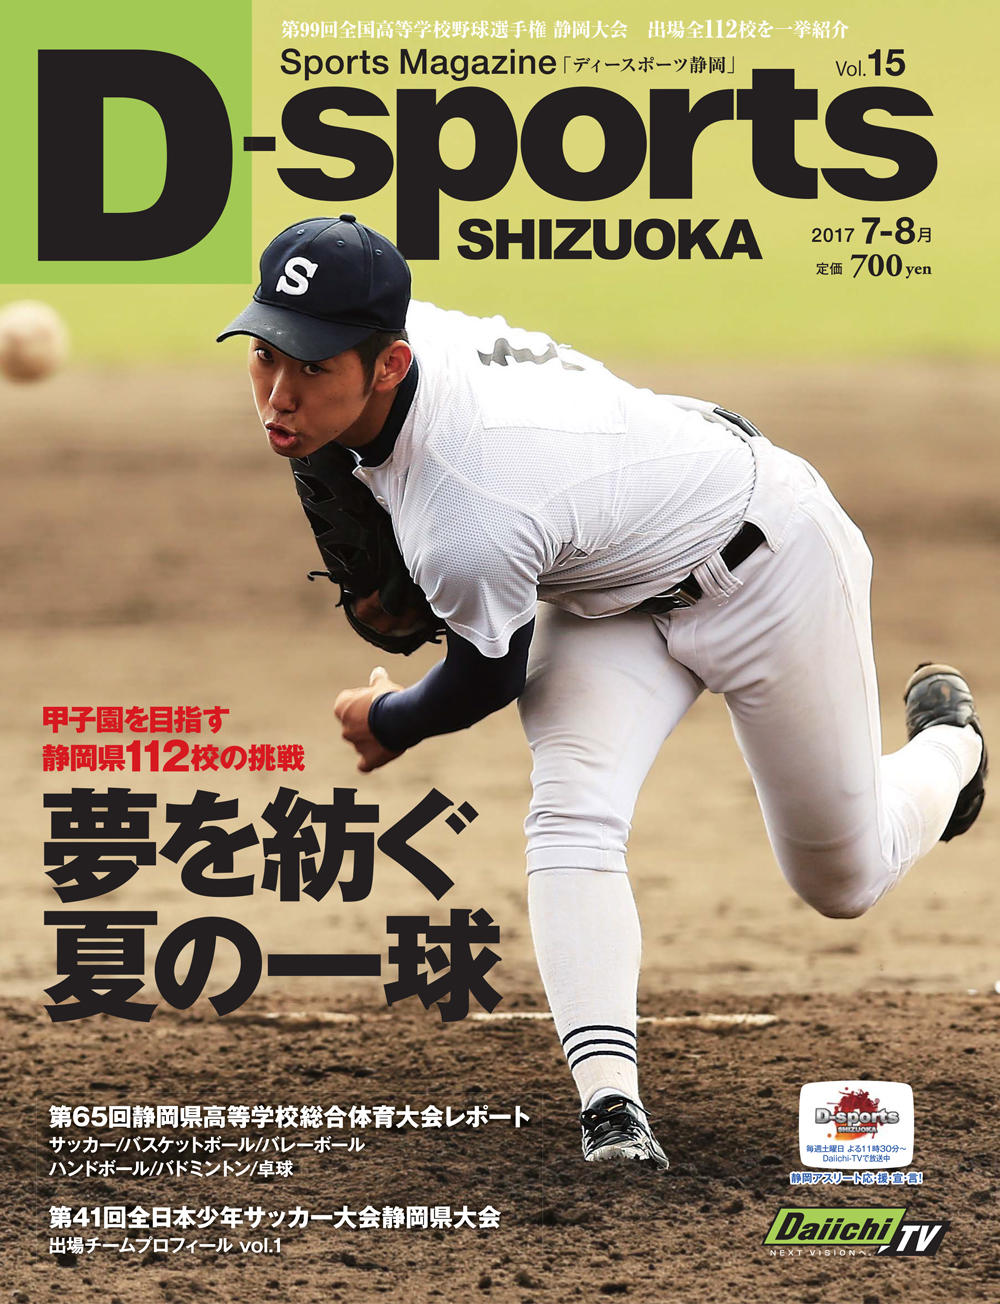 http://d-sports.shizuokastandard.jp/article/2017/15_h1_1000.jpg